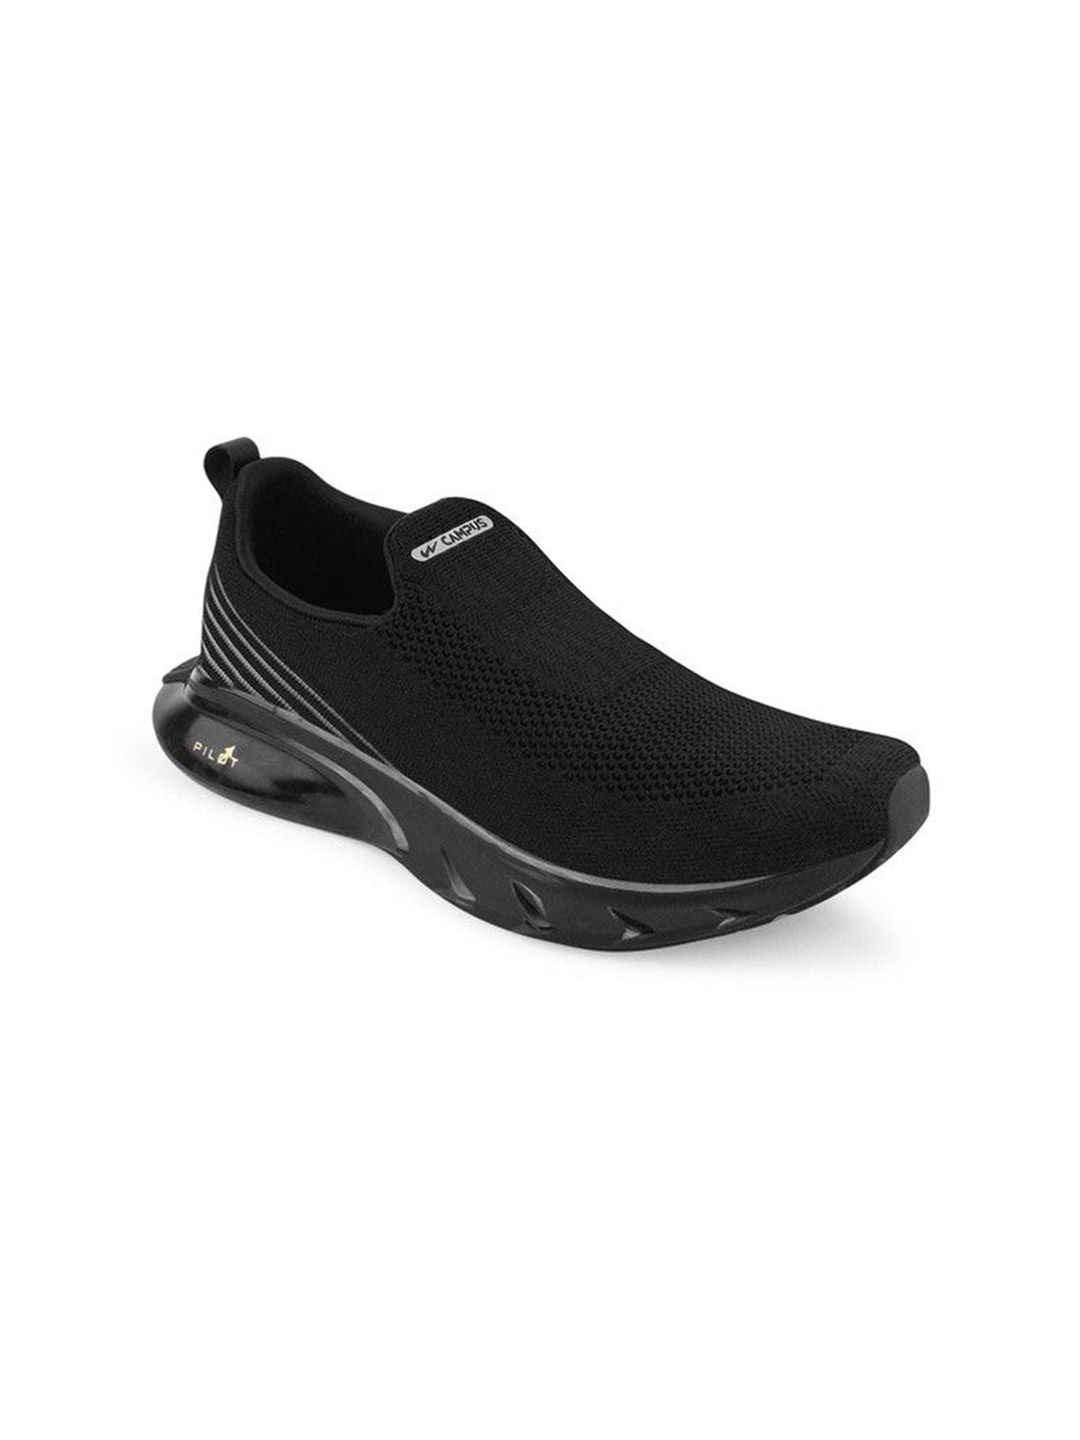 Buy Men Pilot Pro Black Running Shoes From Fancode Shop.